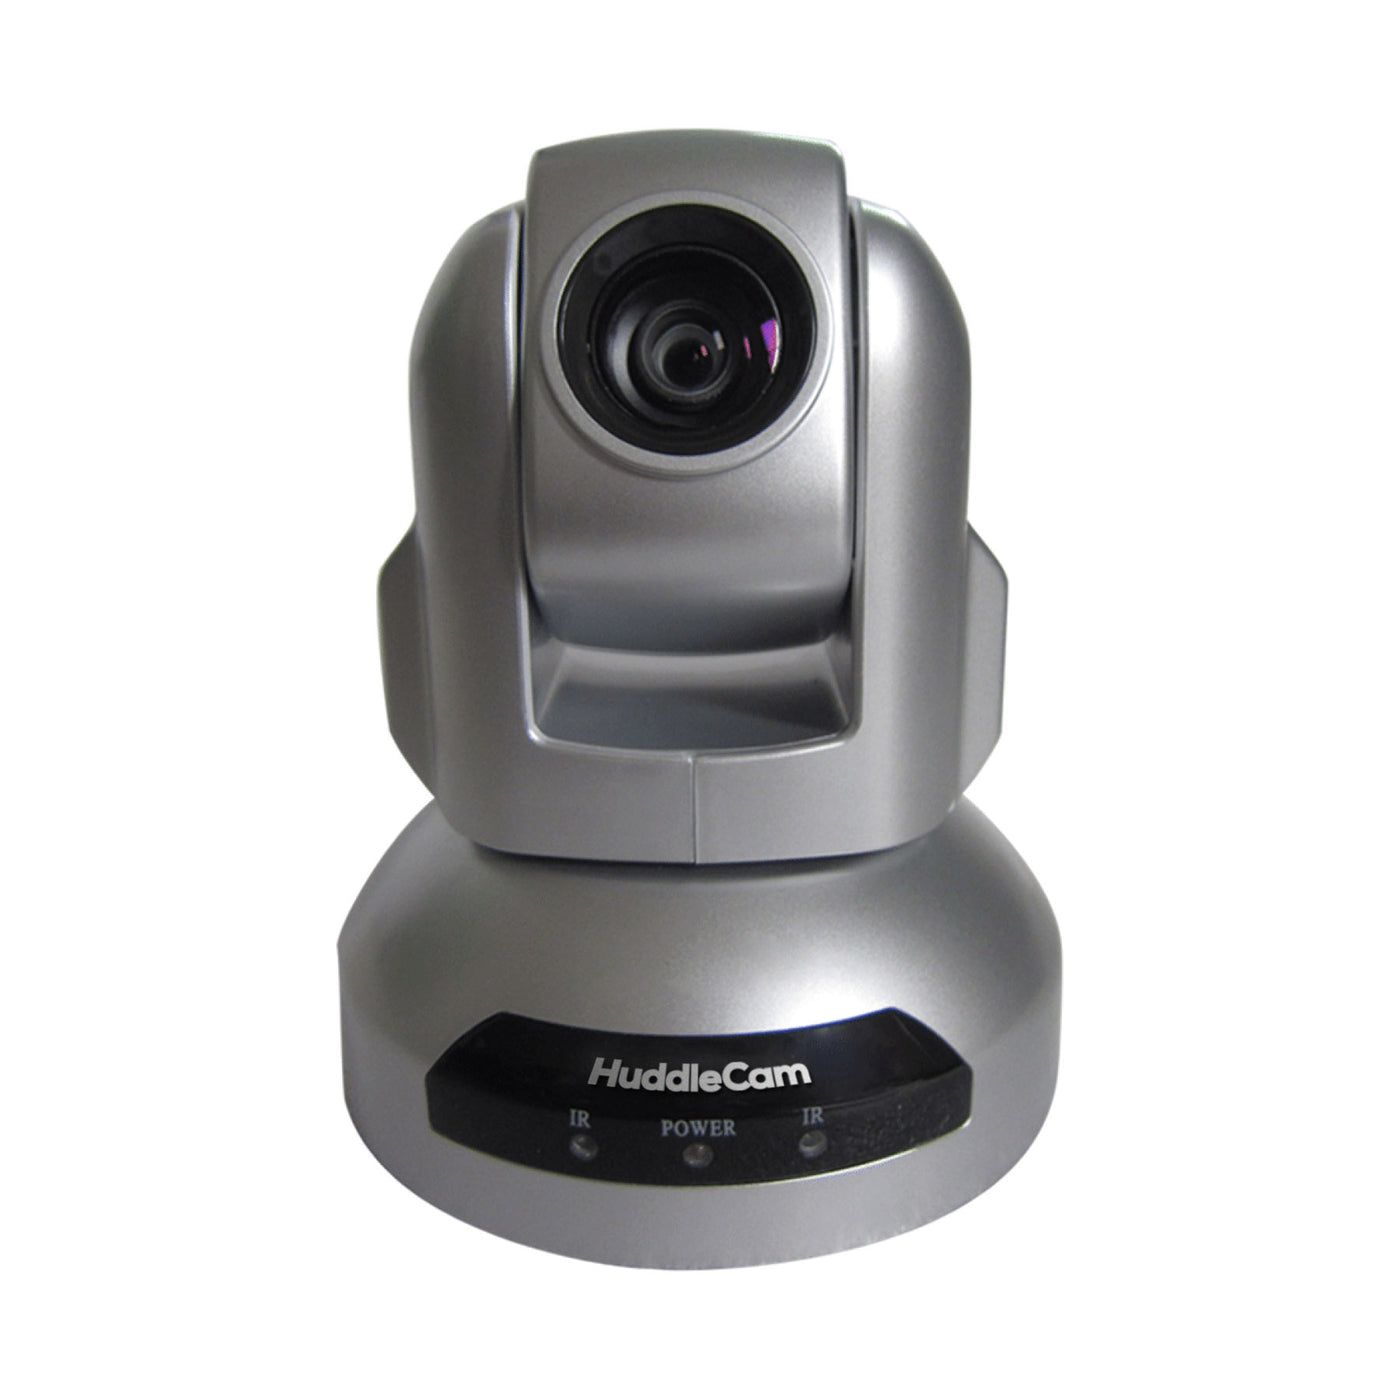 HuddleCamHD 3x Optical Zoom, PTZ USB Camera (Gray)